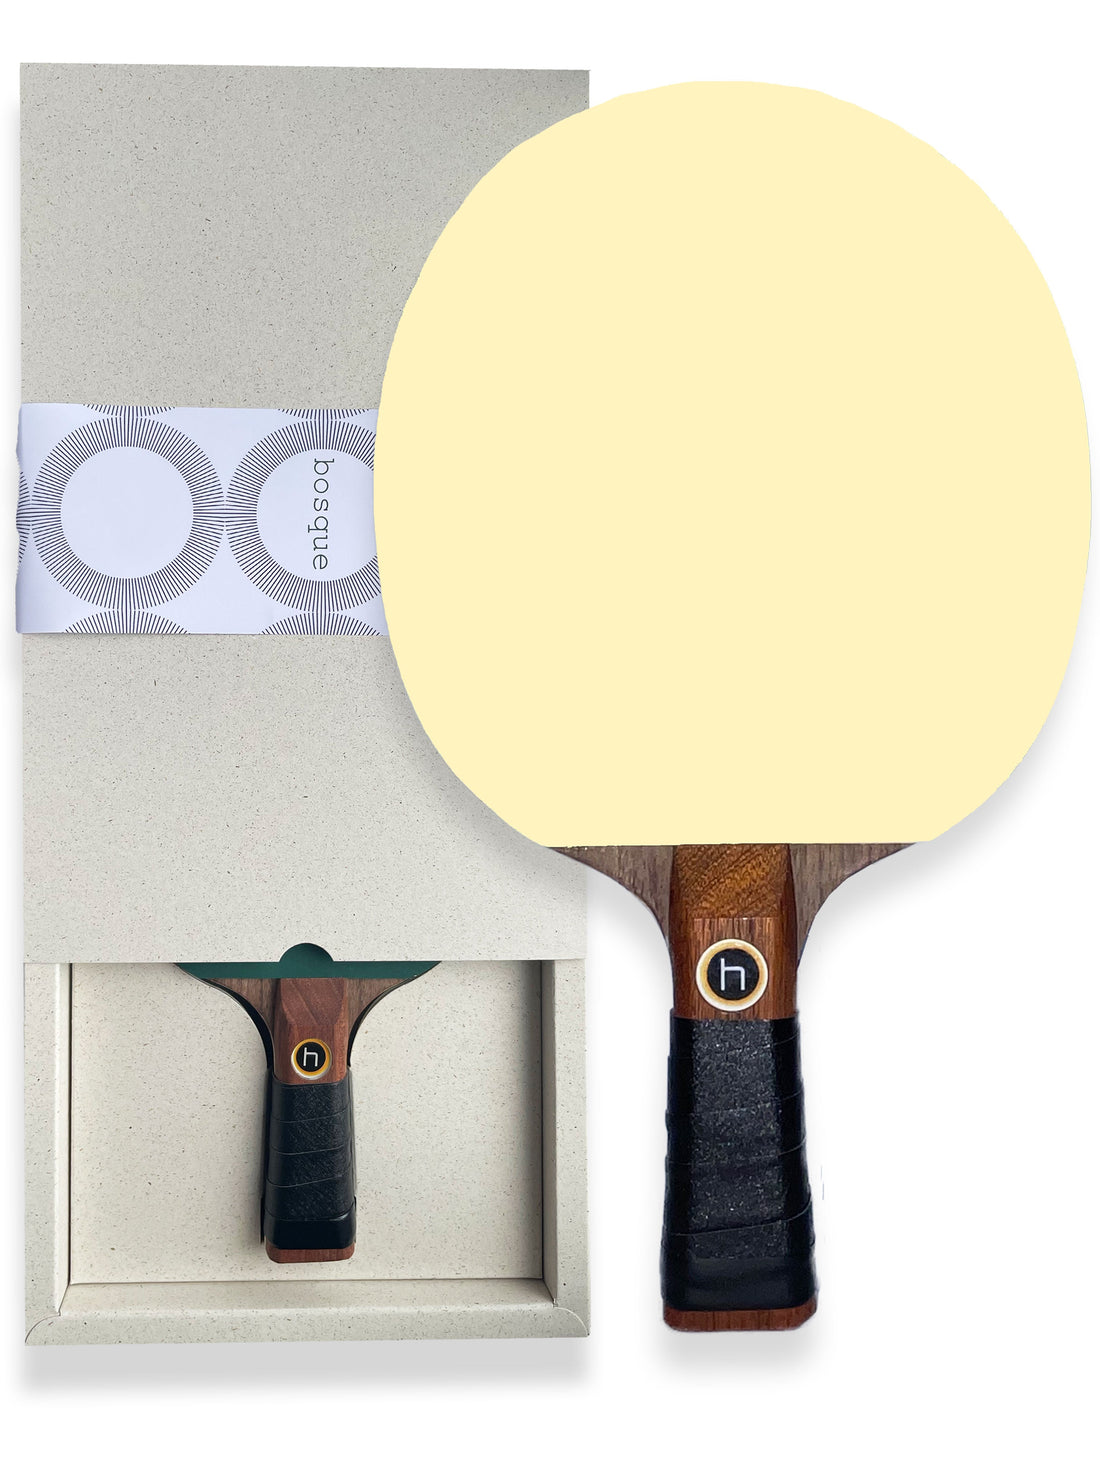 B-STOCK table tennis bat "bosque" made of walnut